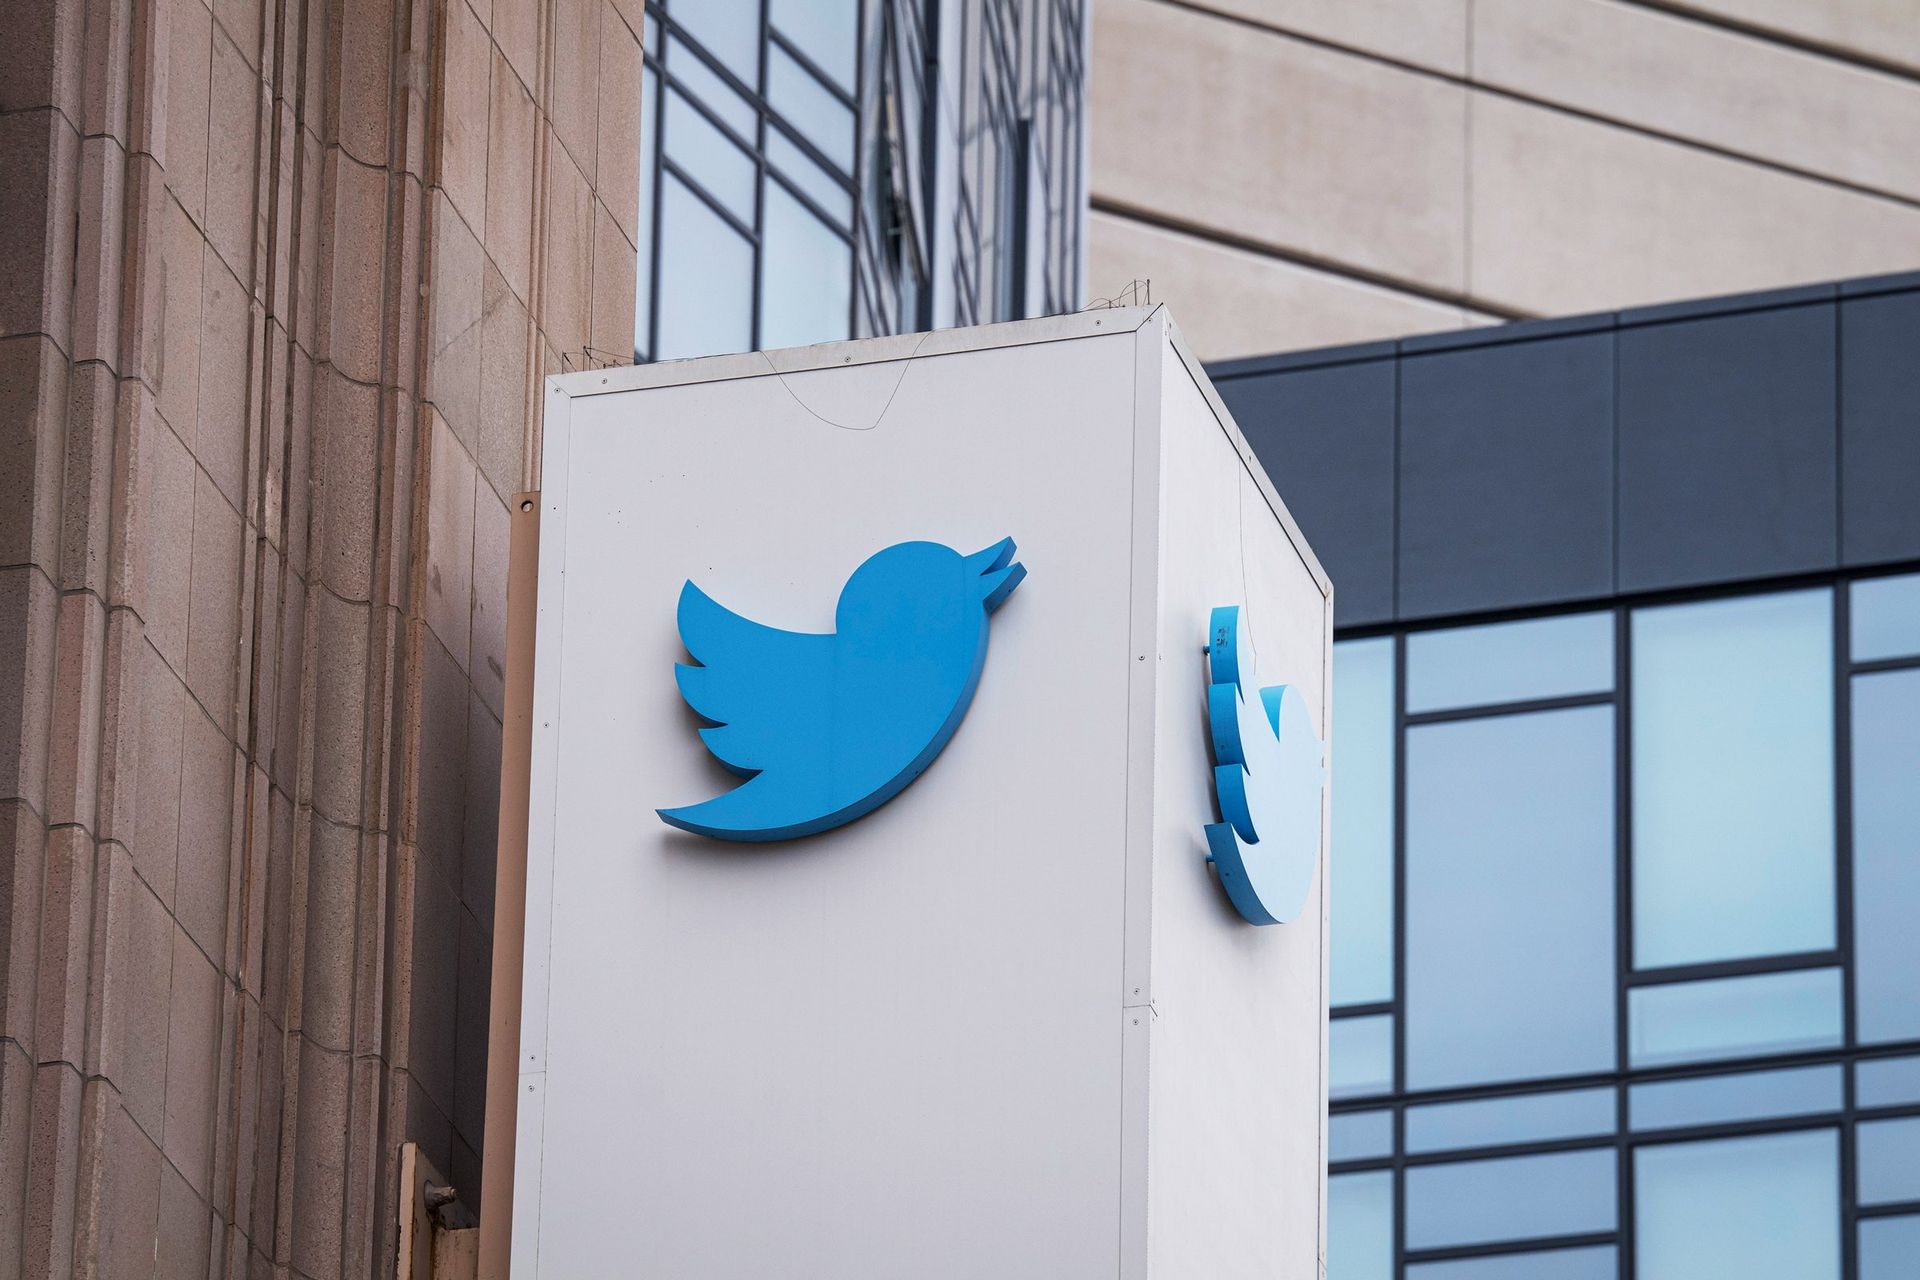 Twitter-tronkamp: CEO fyrer 2 direktører, stopper ansættelsen